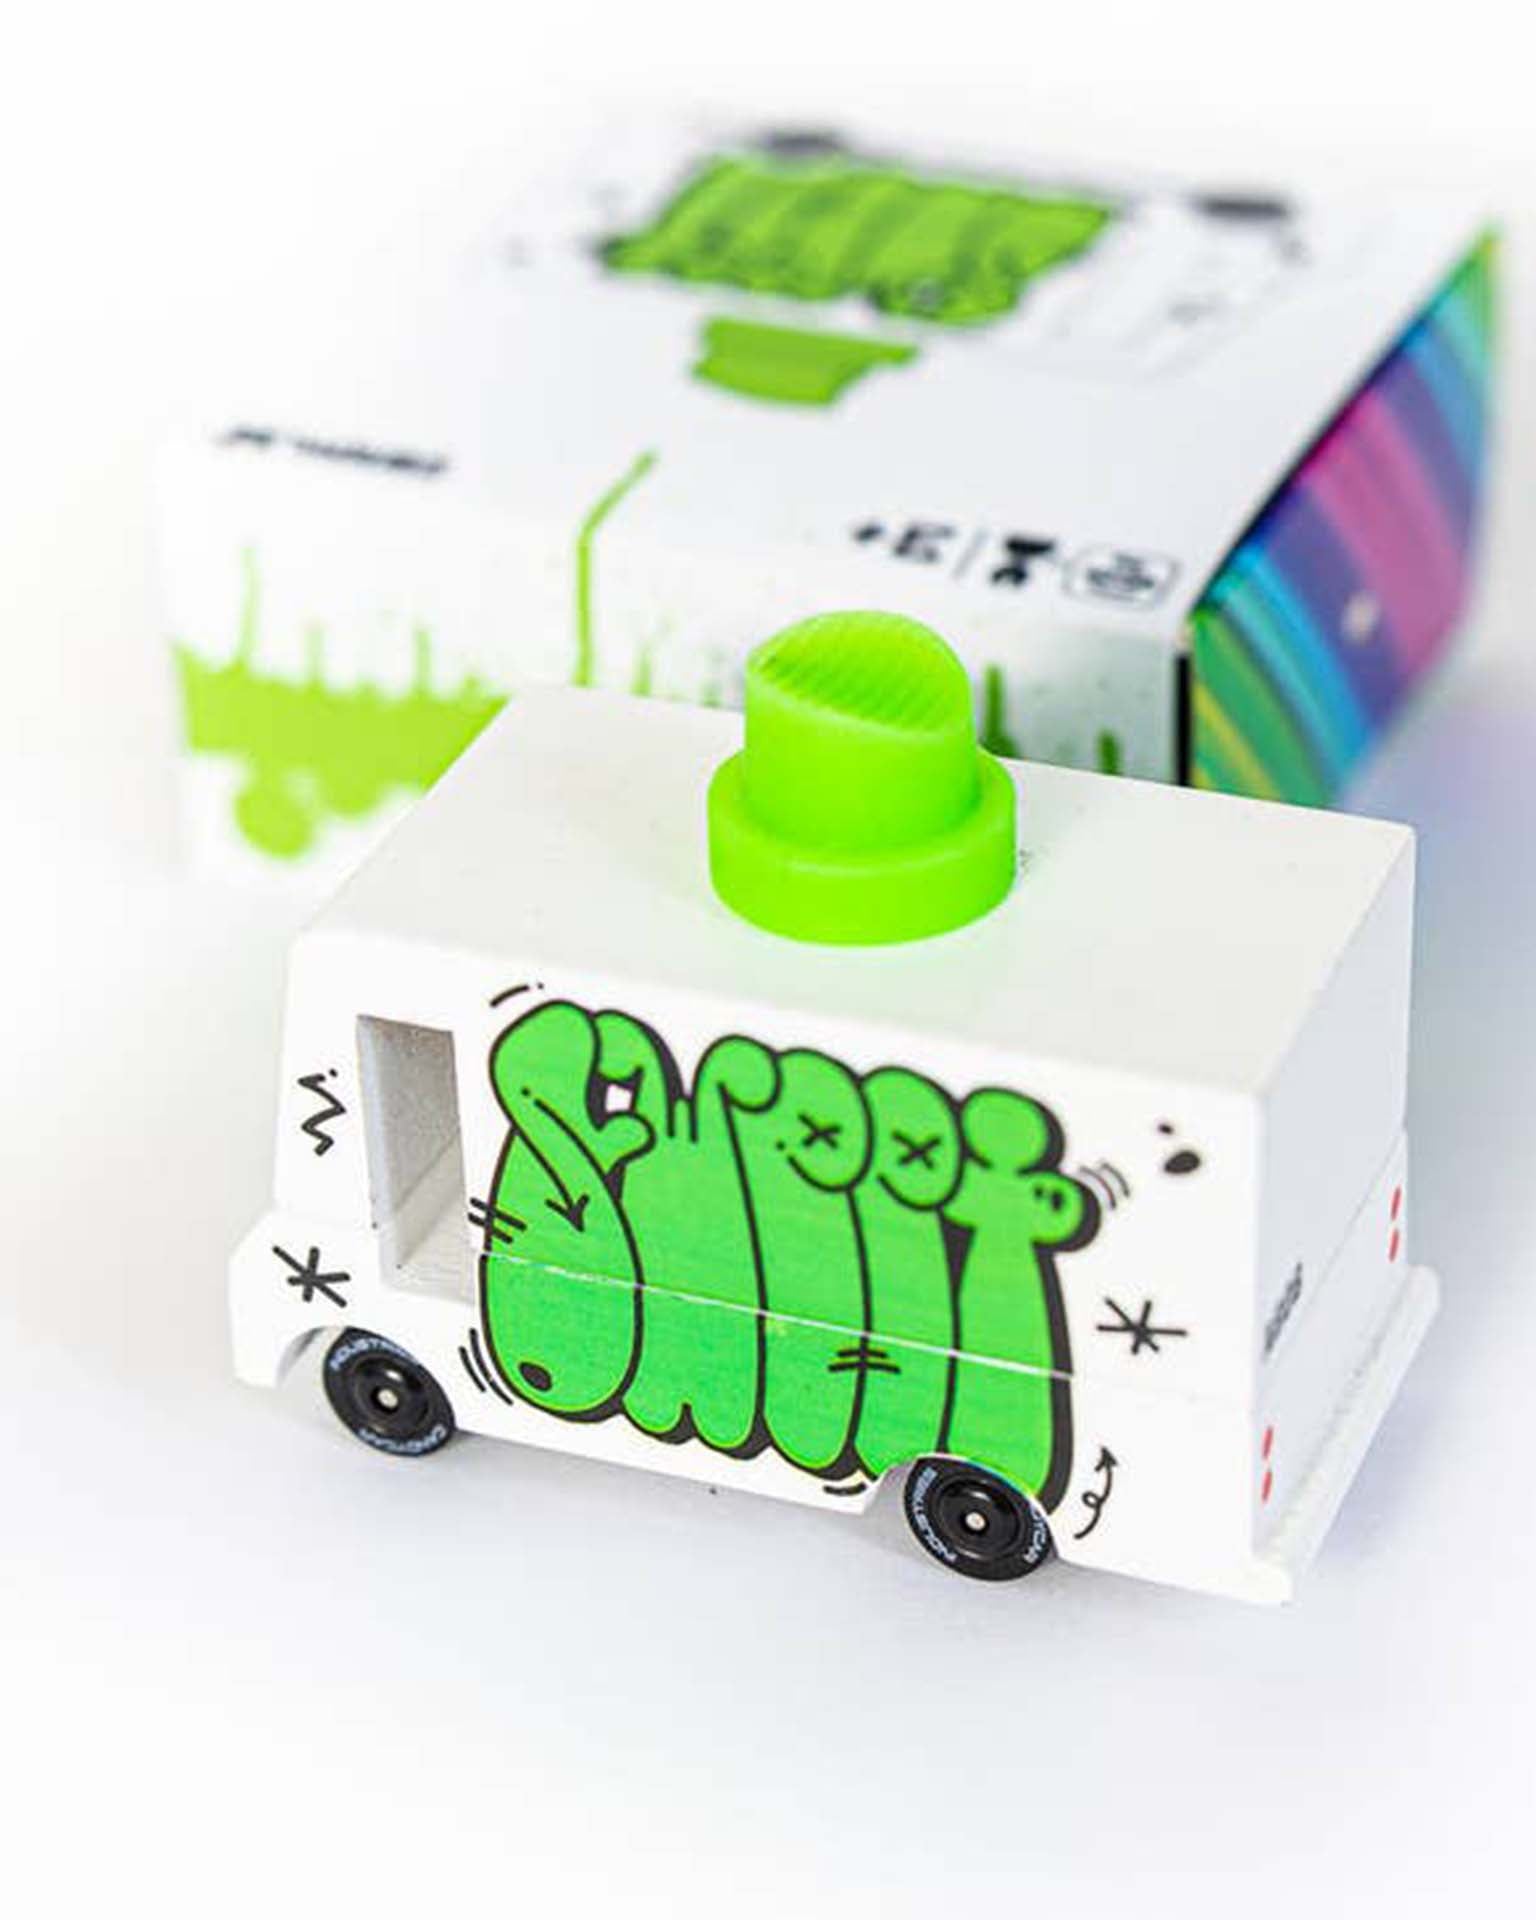 Little candylab play green graffiti candyvan